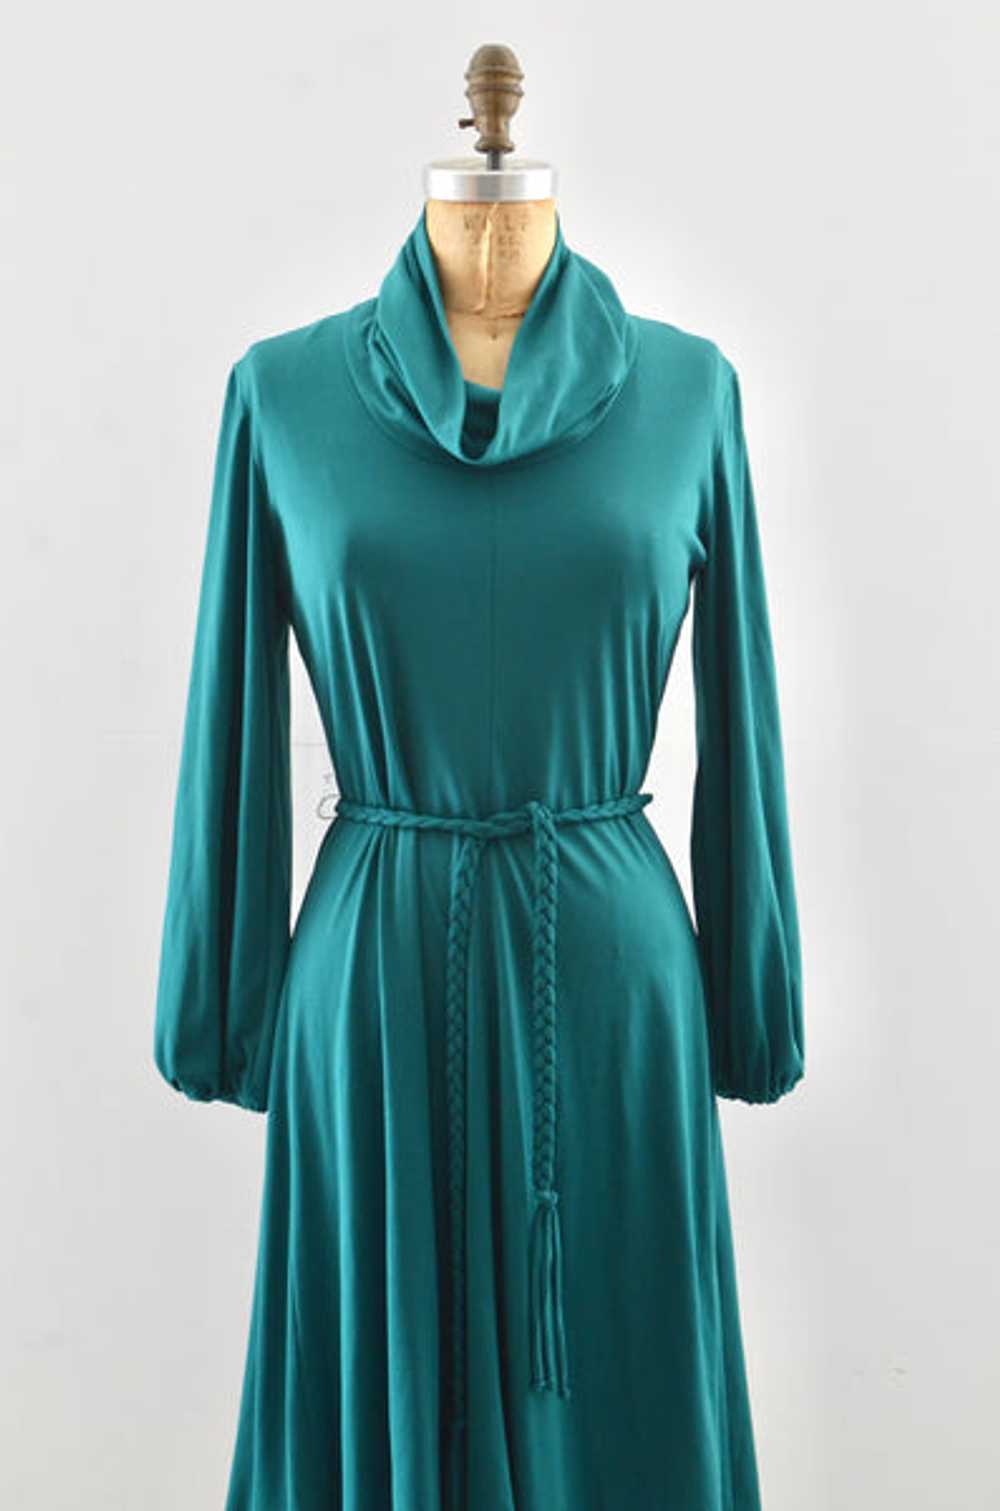 70's Jewel Green Dress - image 4